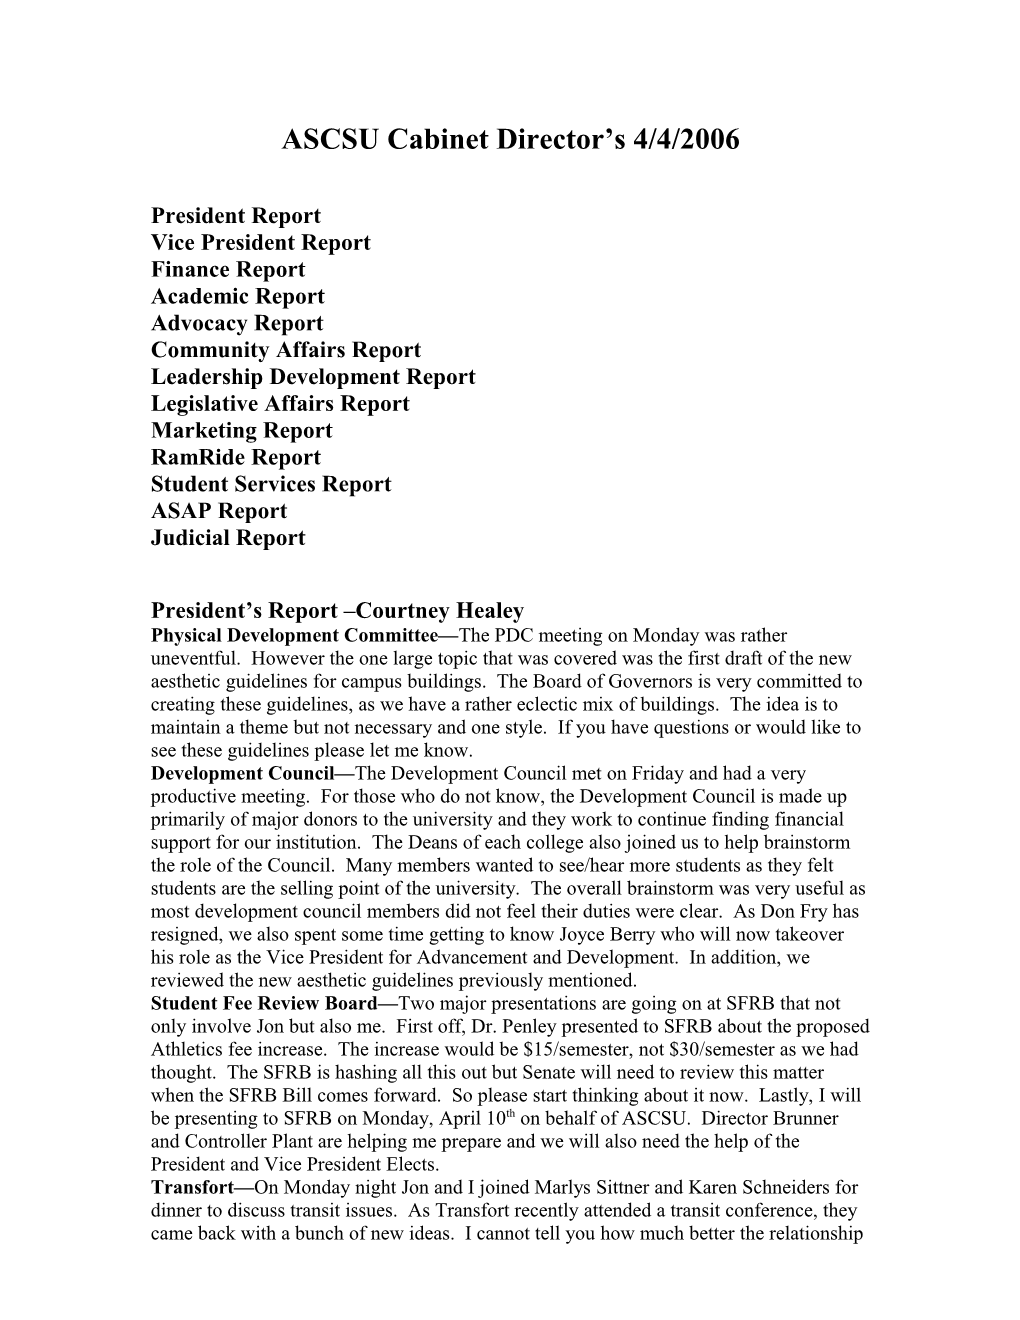 ASCSU Cabinet Director S Reports 11/2/05